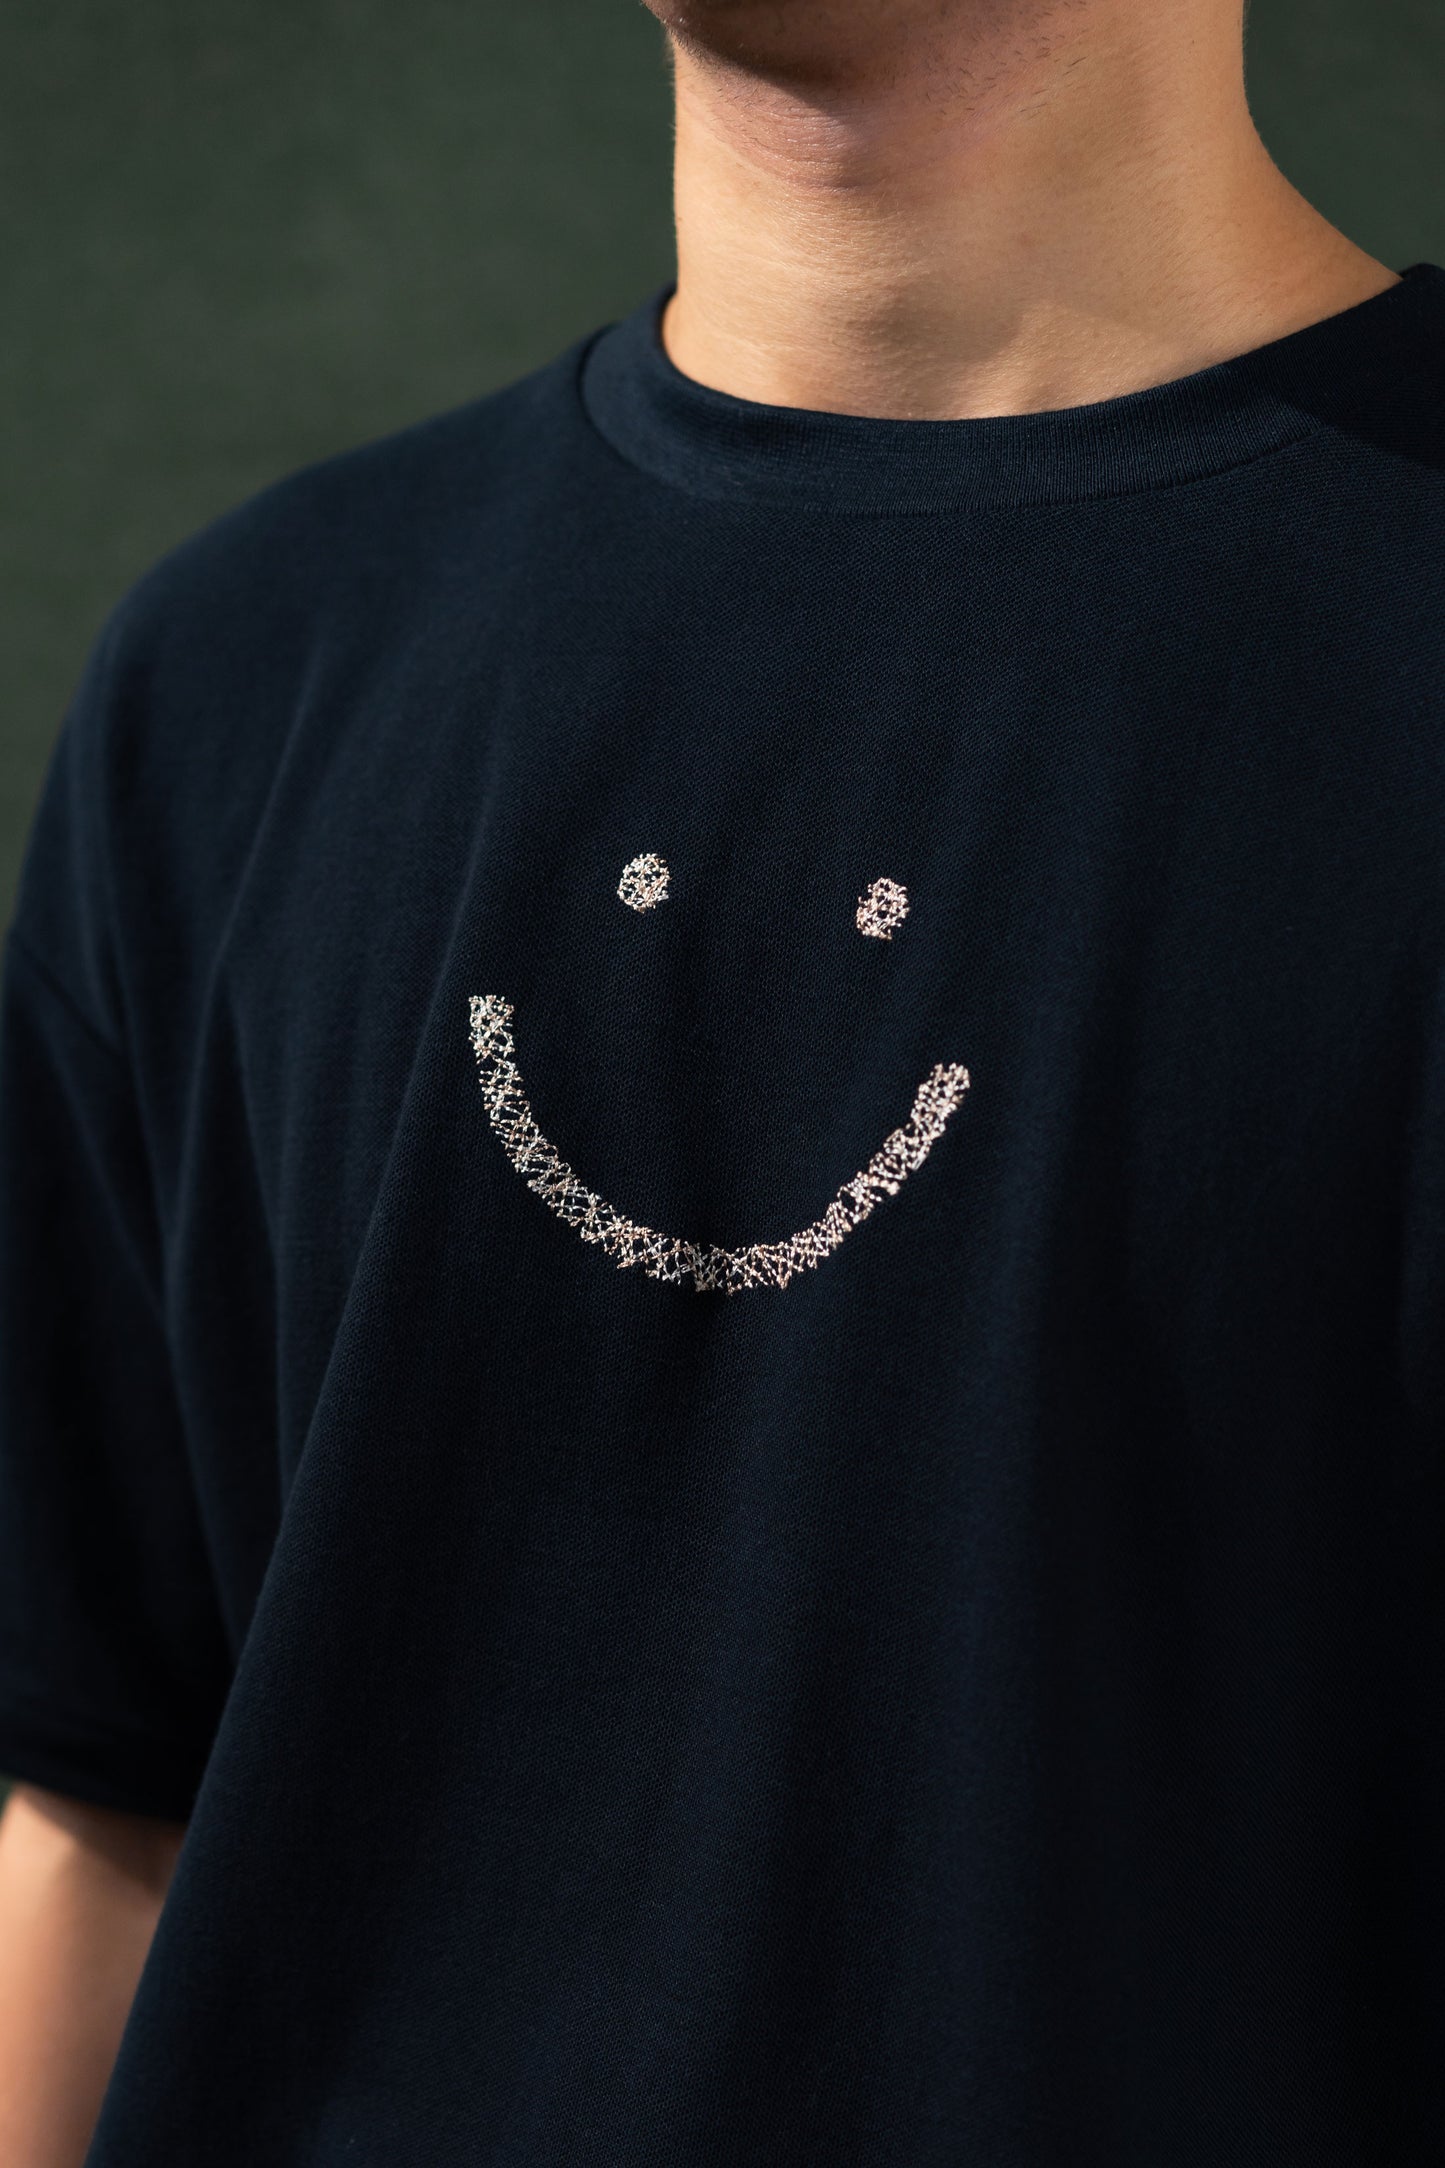 Pique T-Shirt Navy Triple Stitch Smiley